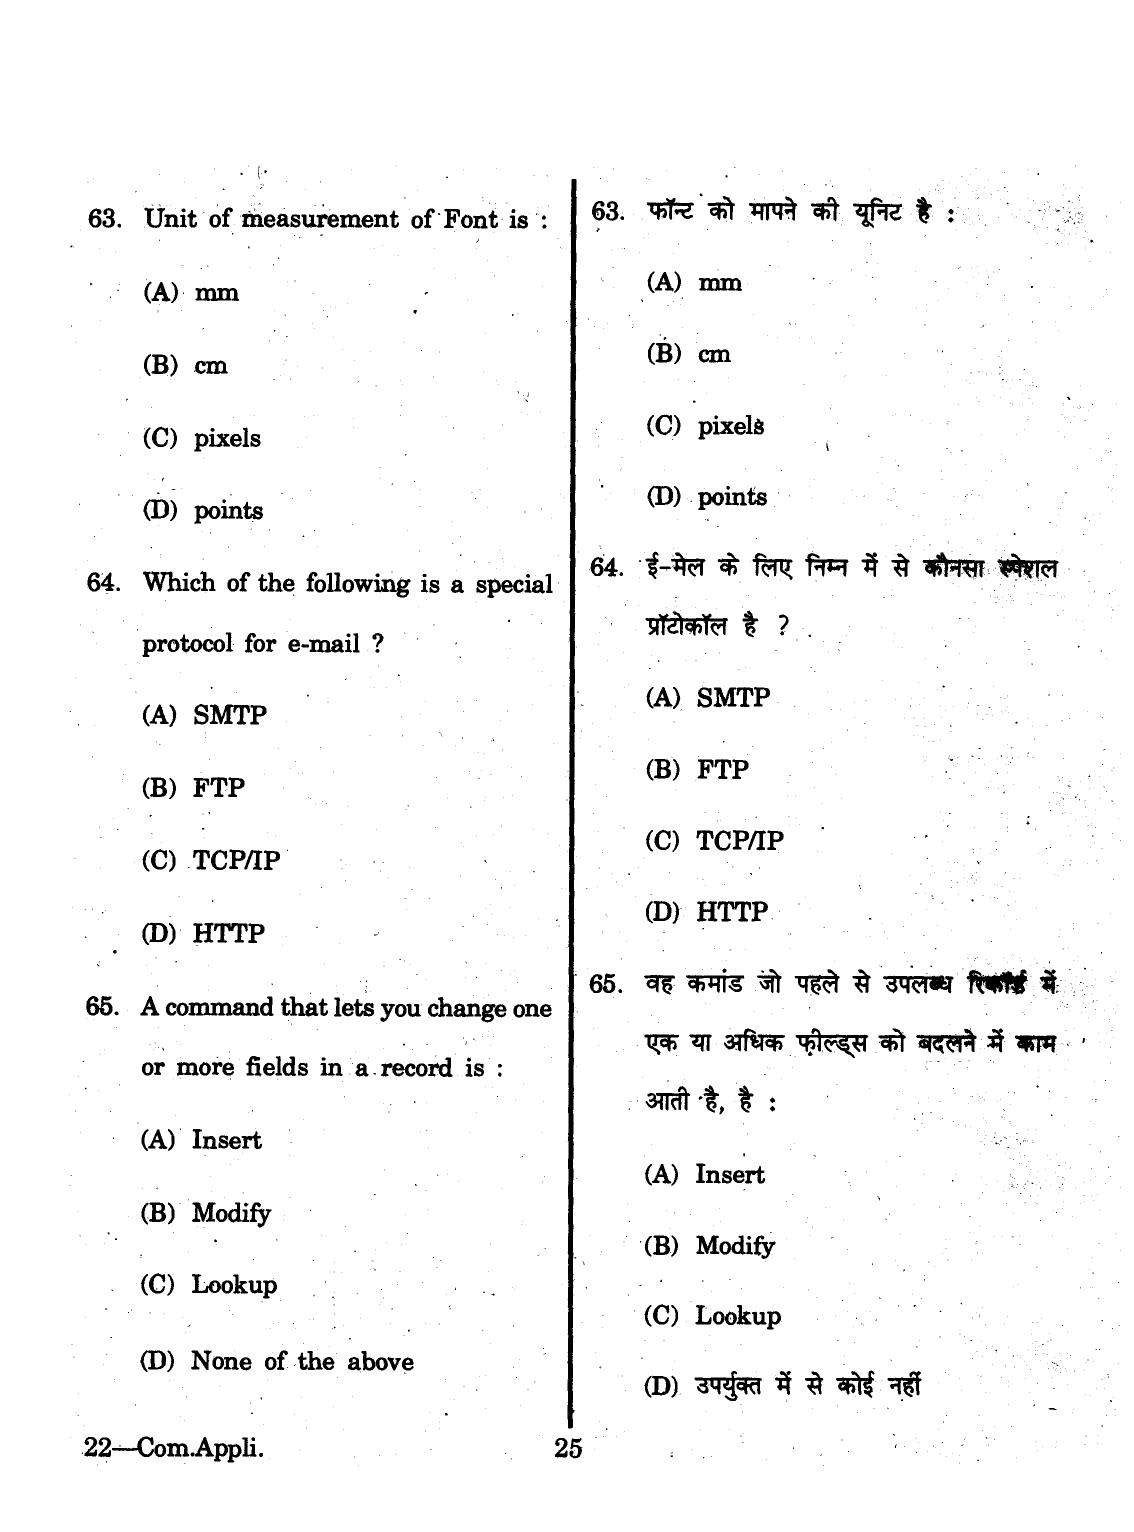 URATPG 2015 Computer Application Question Paper - Page 25